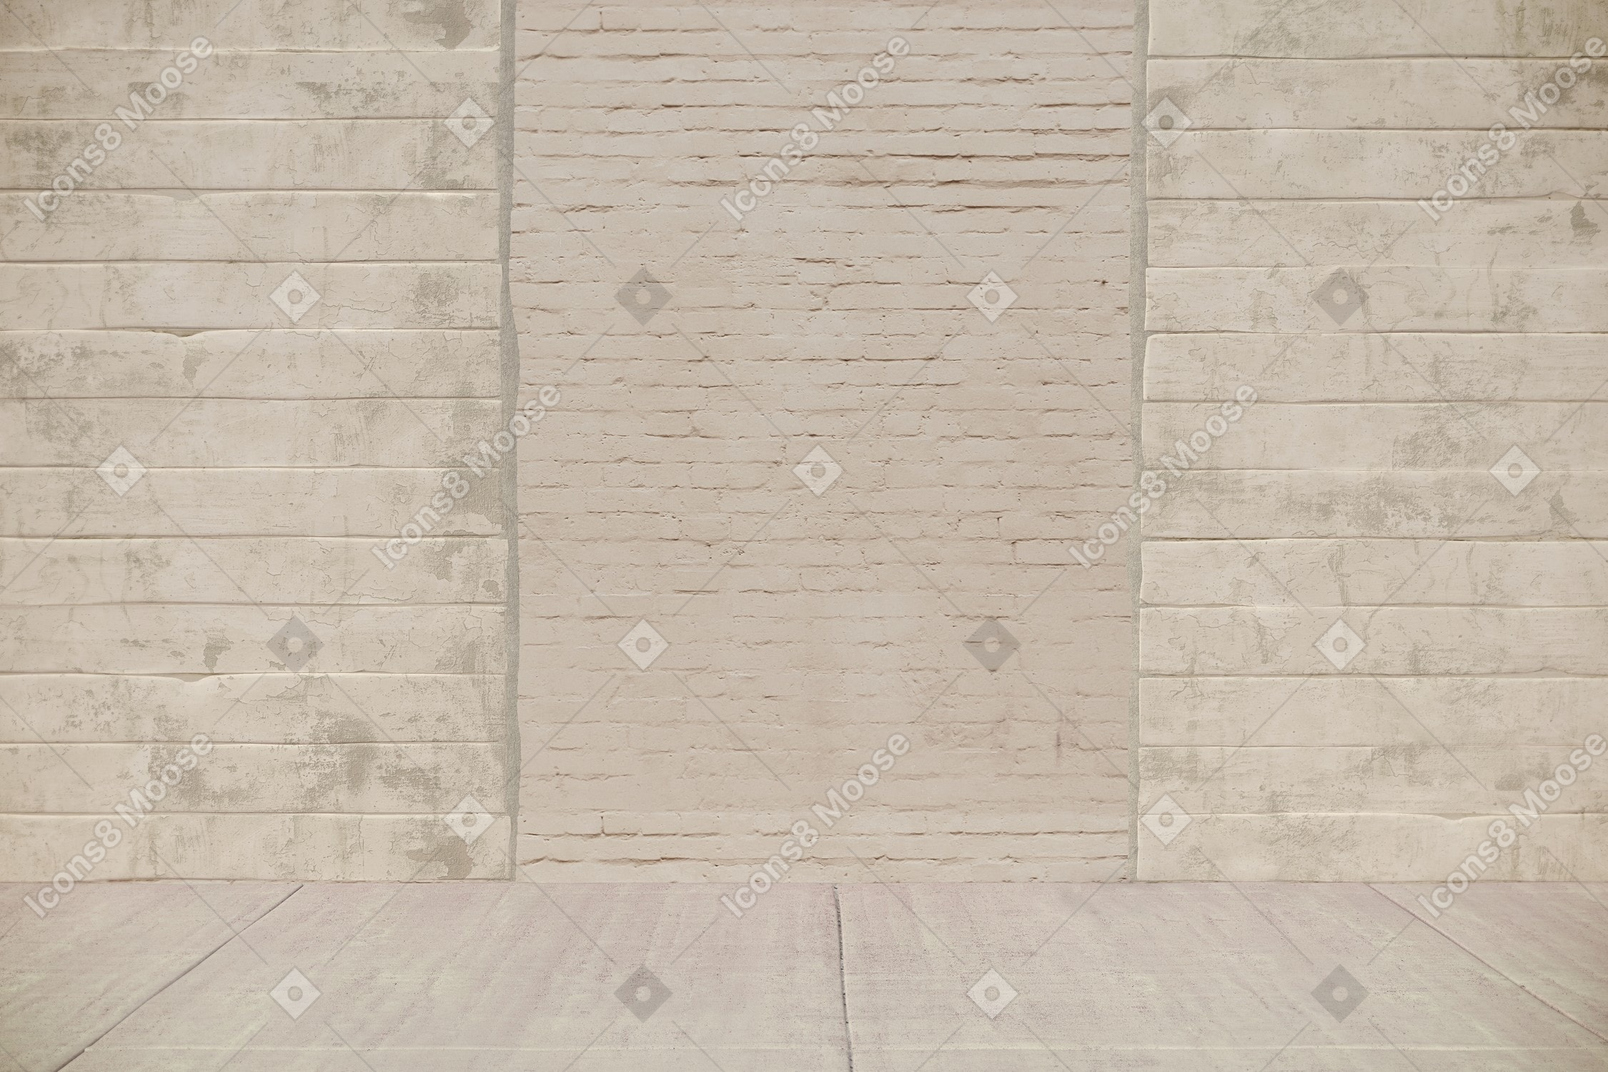 White marble floor tiles in a modern interior